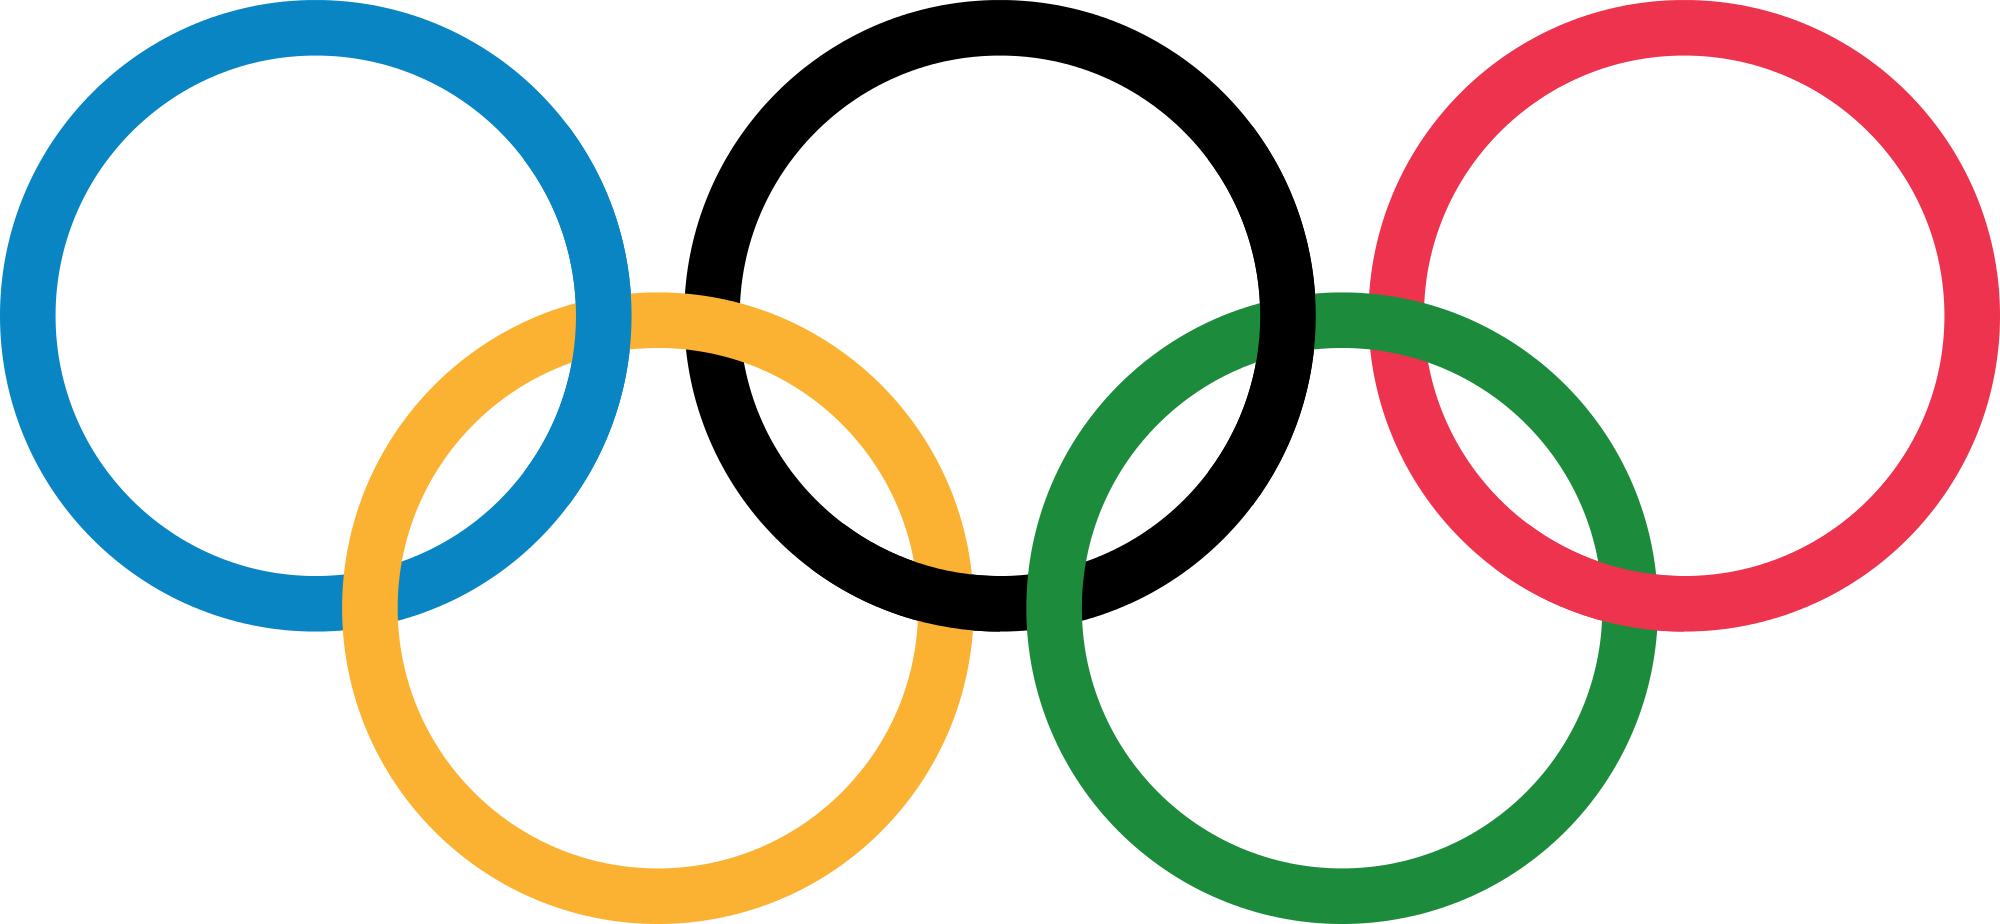 olympics clipart gold medallion